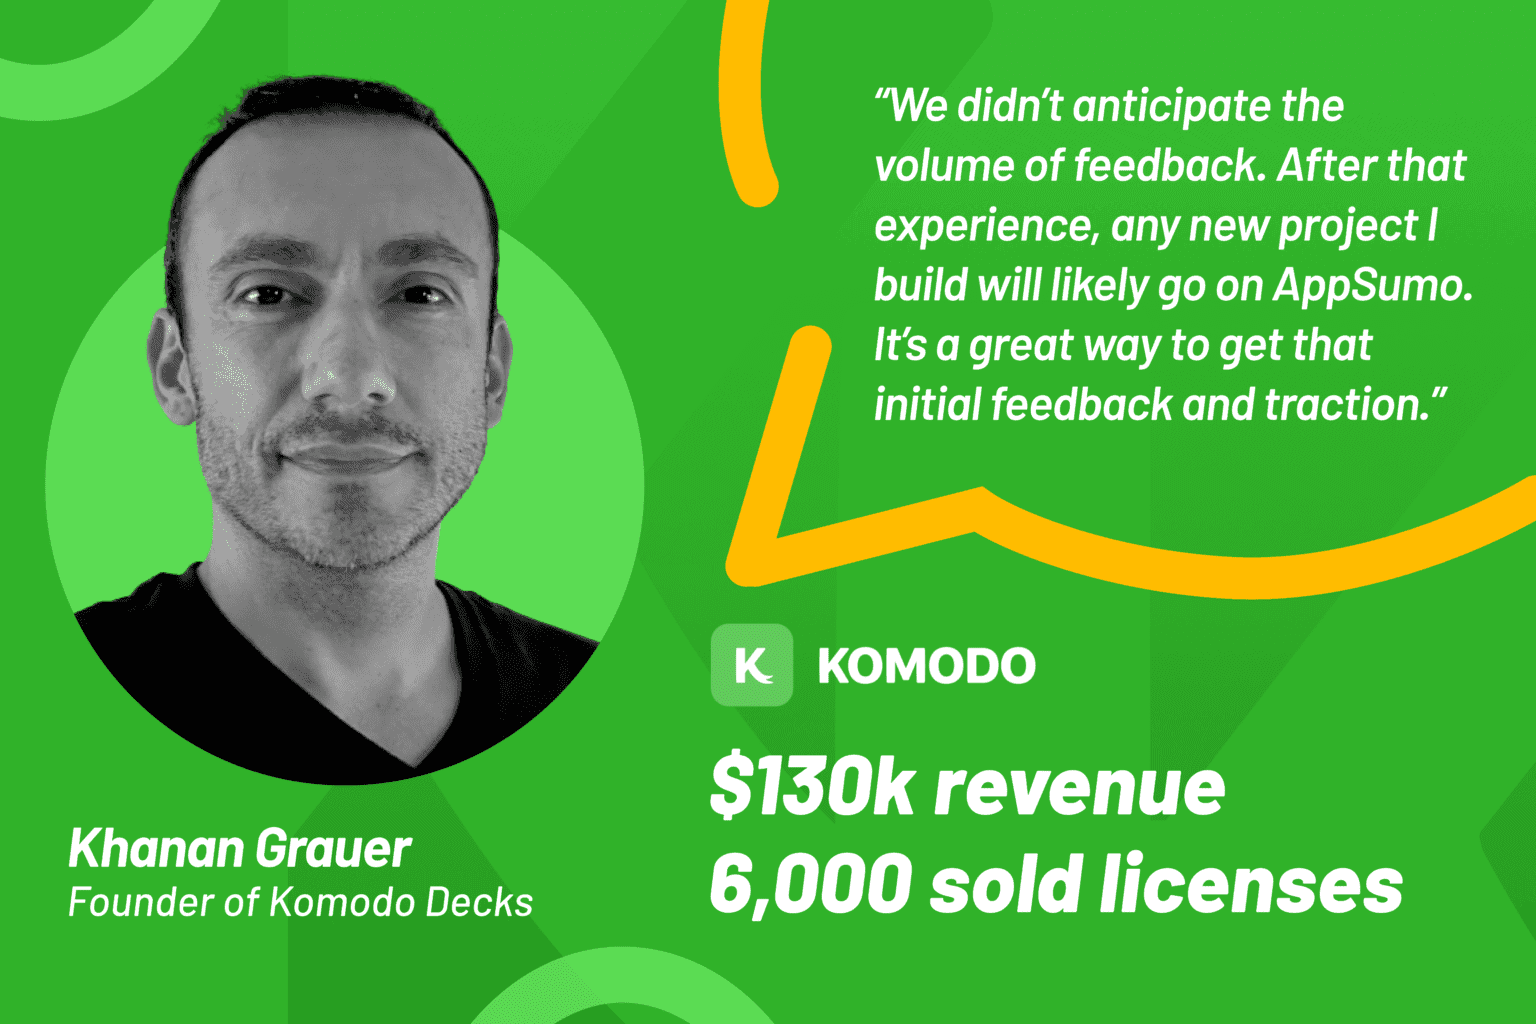 Komodo Decks's founder -Khanan Grauer